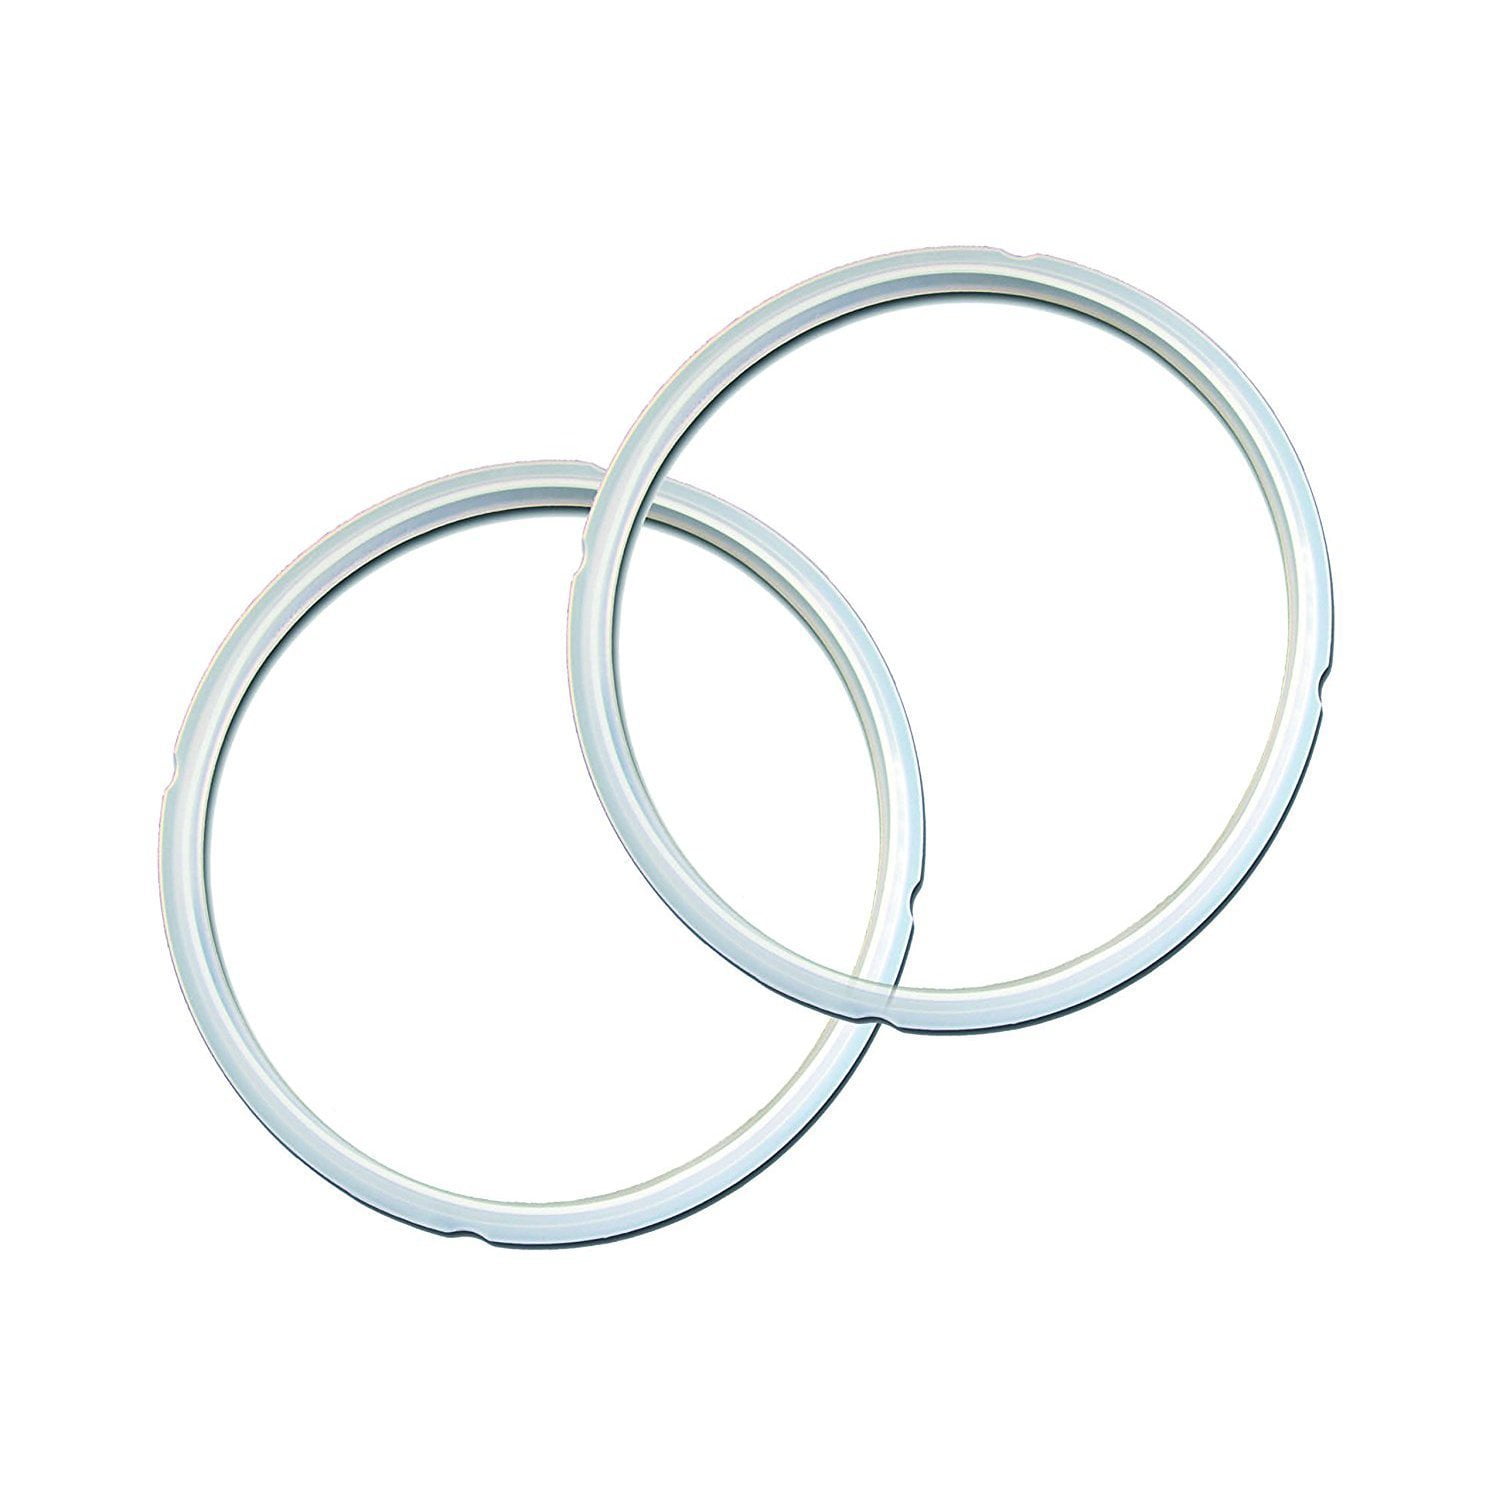 6 Quart Instant Pot Sealing Ring - Replacement Pinch Test 100